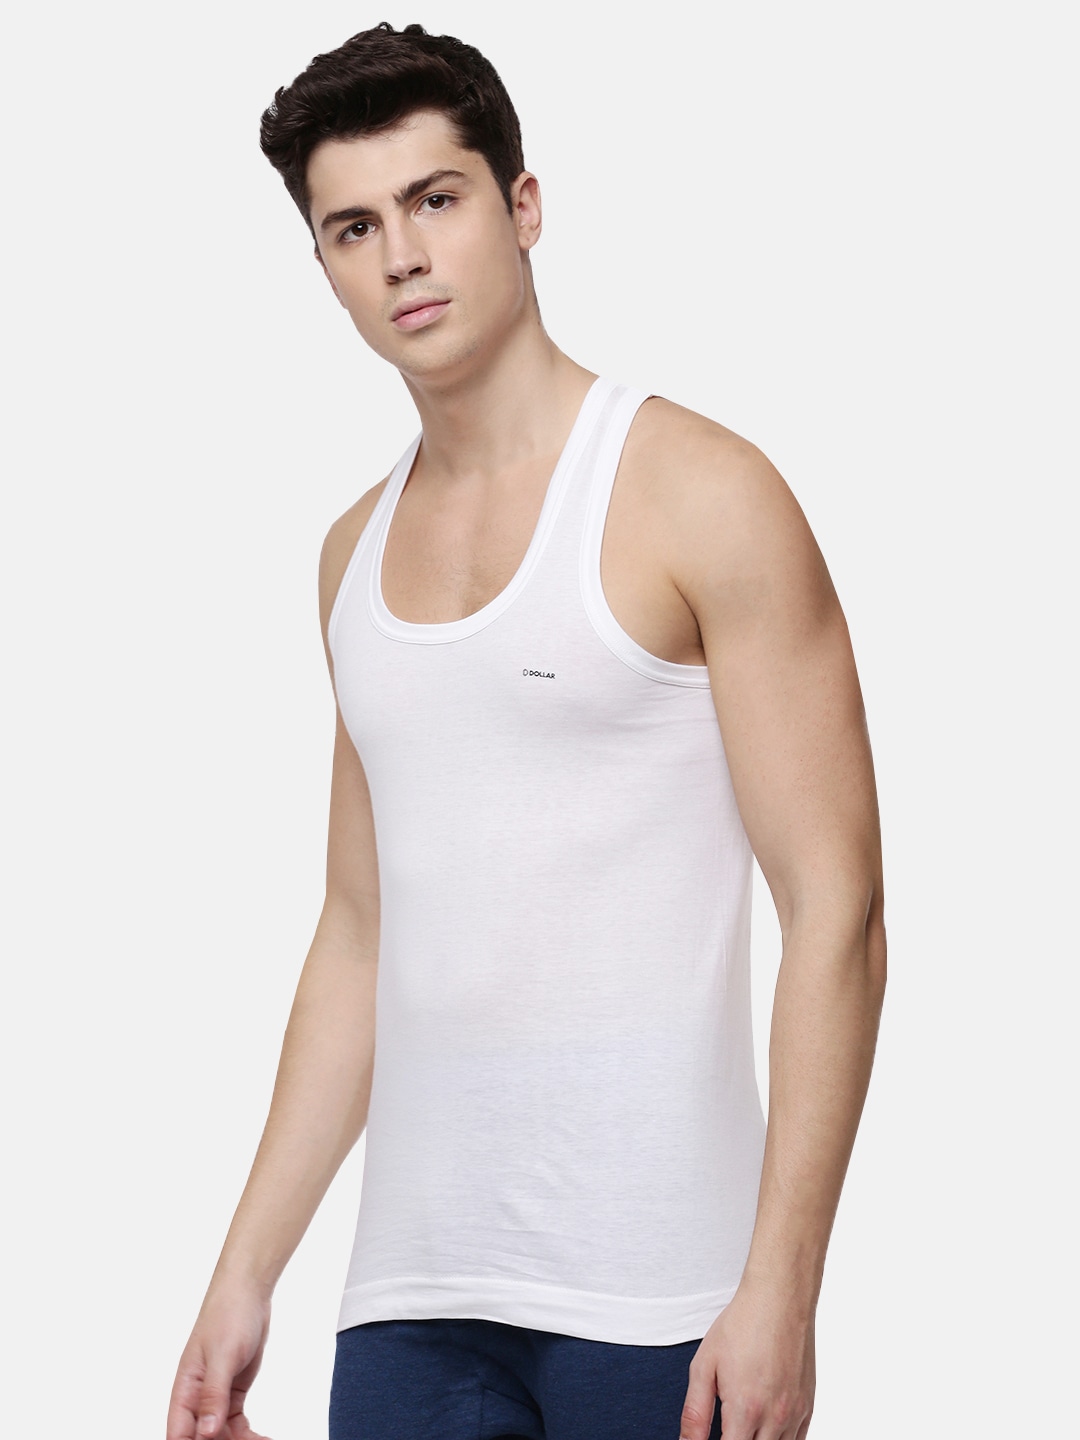 Clothing Innerwear Vests | Dollar Bigboss Pack of 5 White Innerwear Vests MDVE-01-PO5 - RM17304